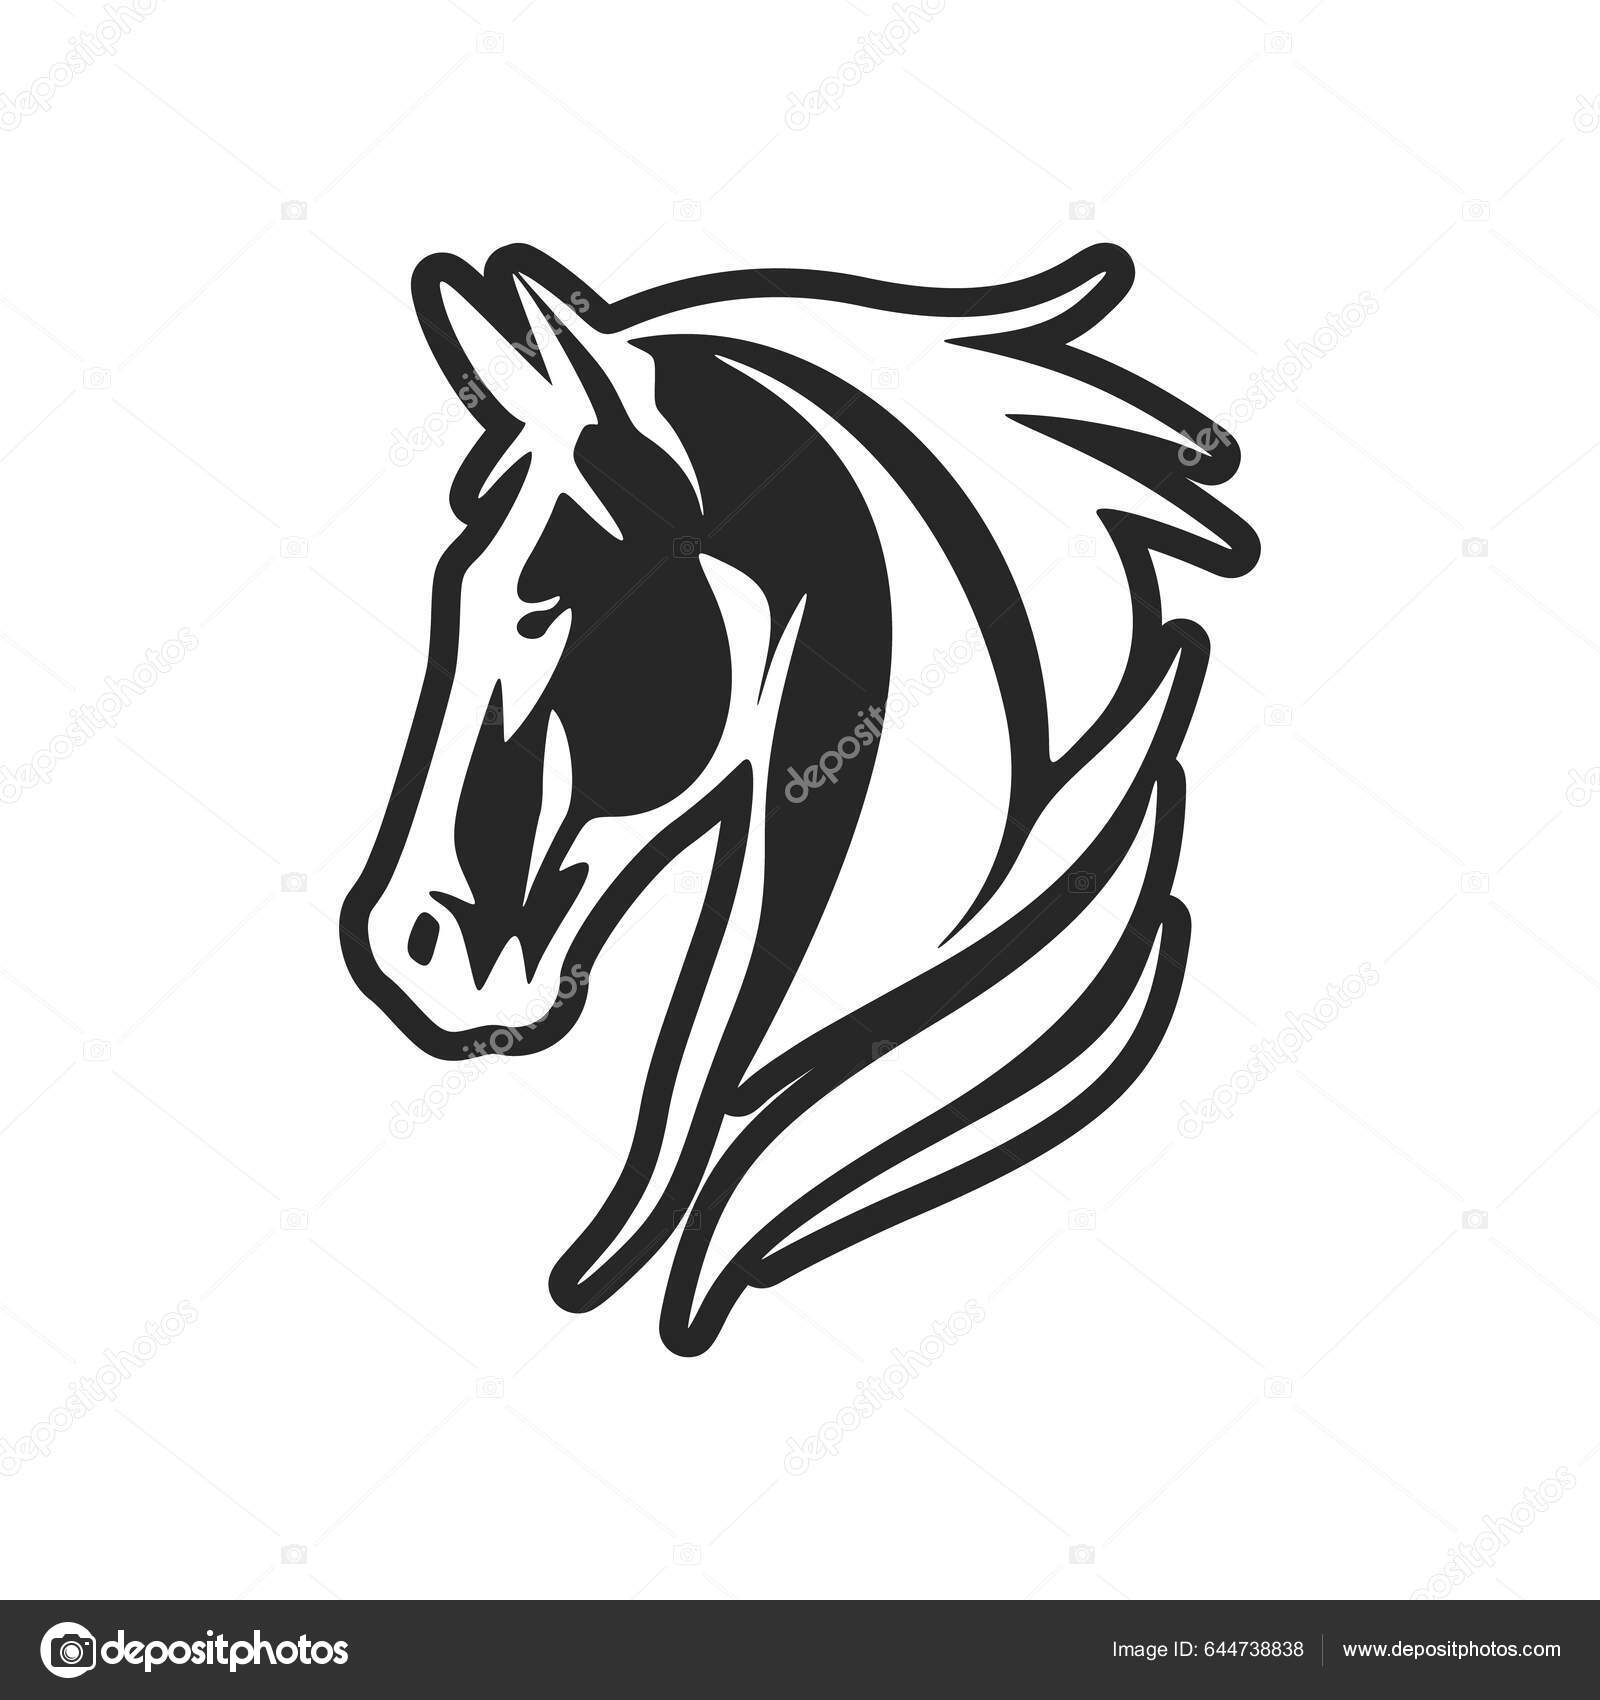 Download horse logo | Horse clip art, Horse silhouette, Horse logo